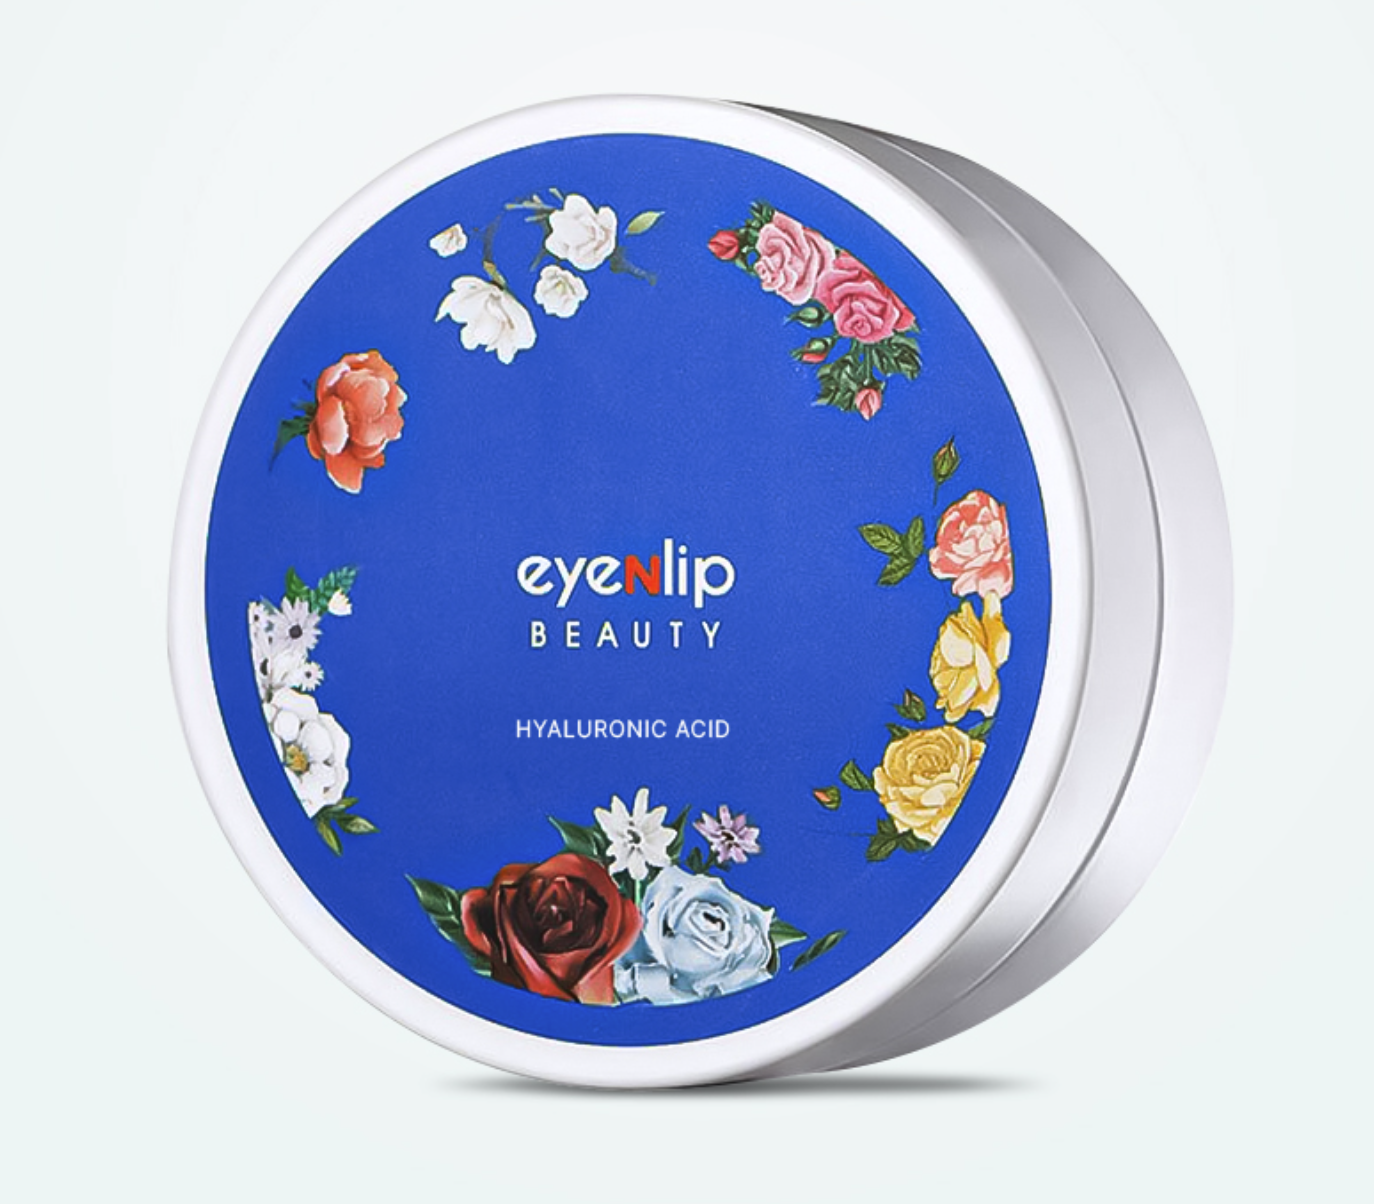 Eyenlip Hyaluronic Acid Hydrogel Eye Patch